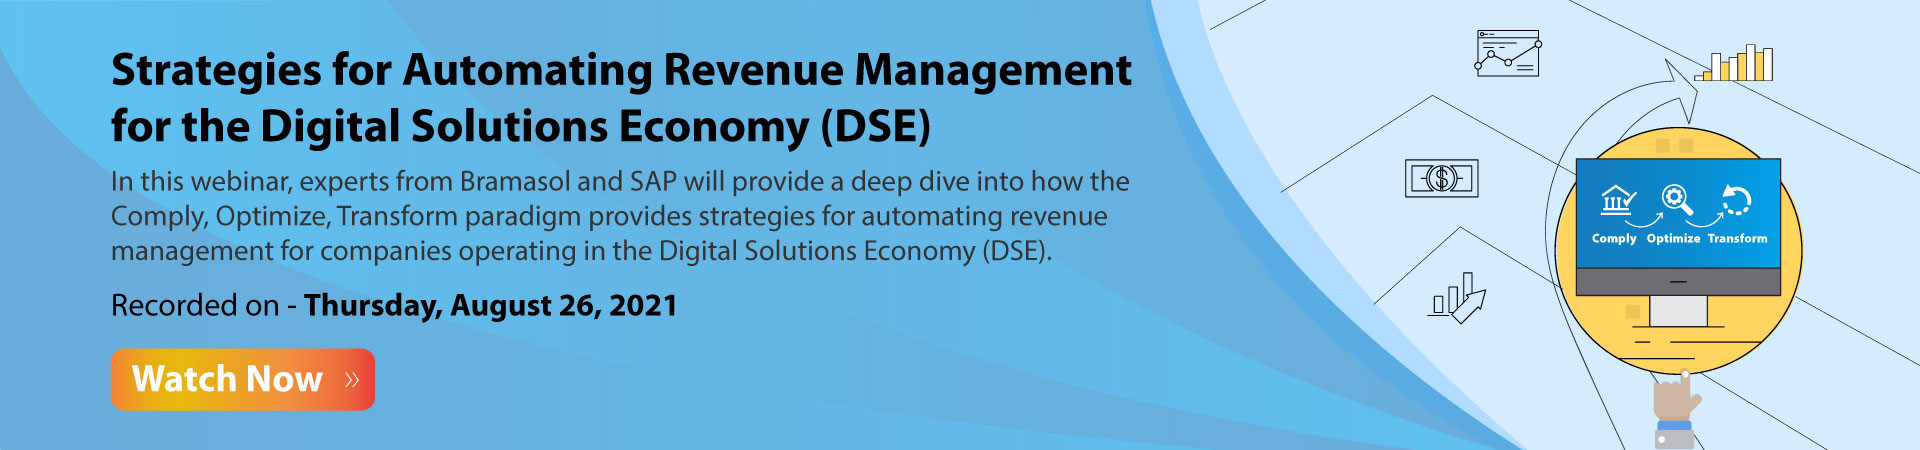 Digital Solutions Economy Banner